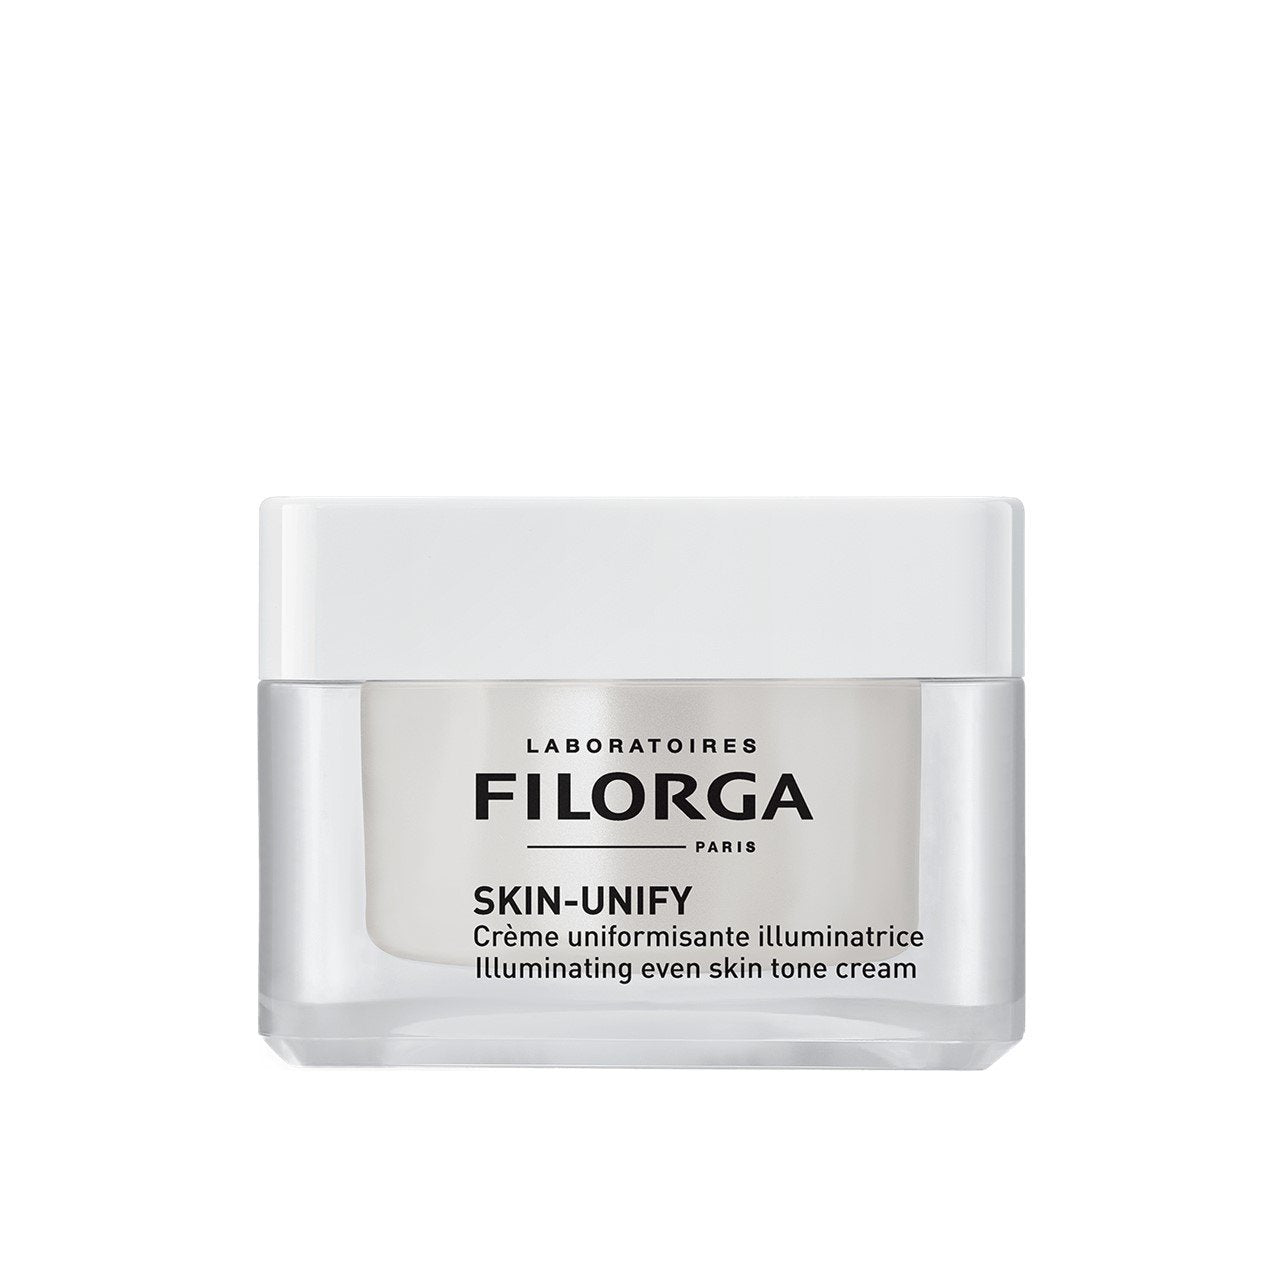 Filorga Skin-Unify Illuminating Unify Skin Tone Cream 50ml